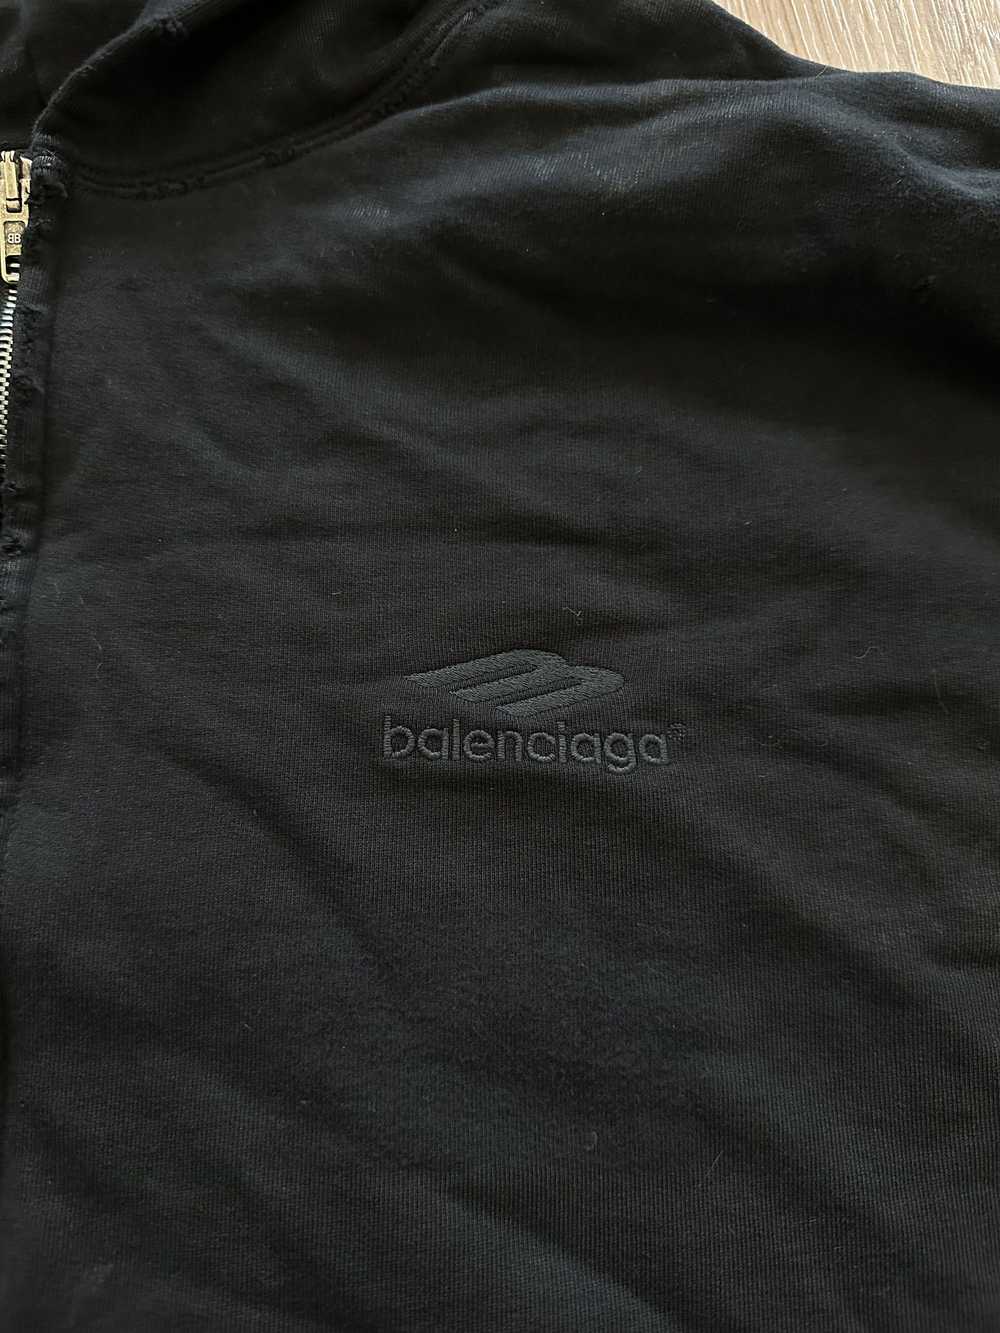 Balenciaga See Now Buy Now Zip Up - image 3